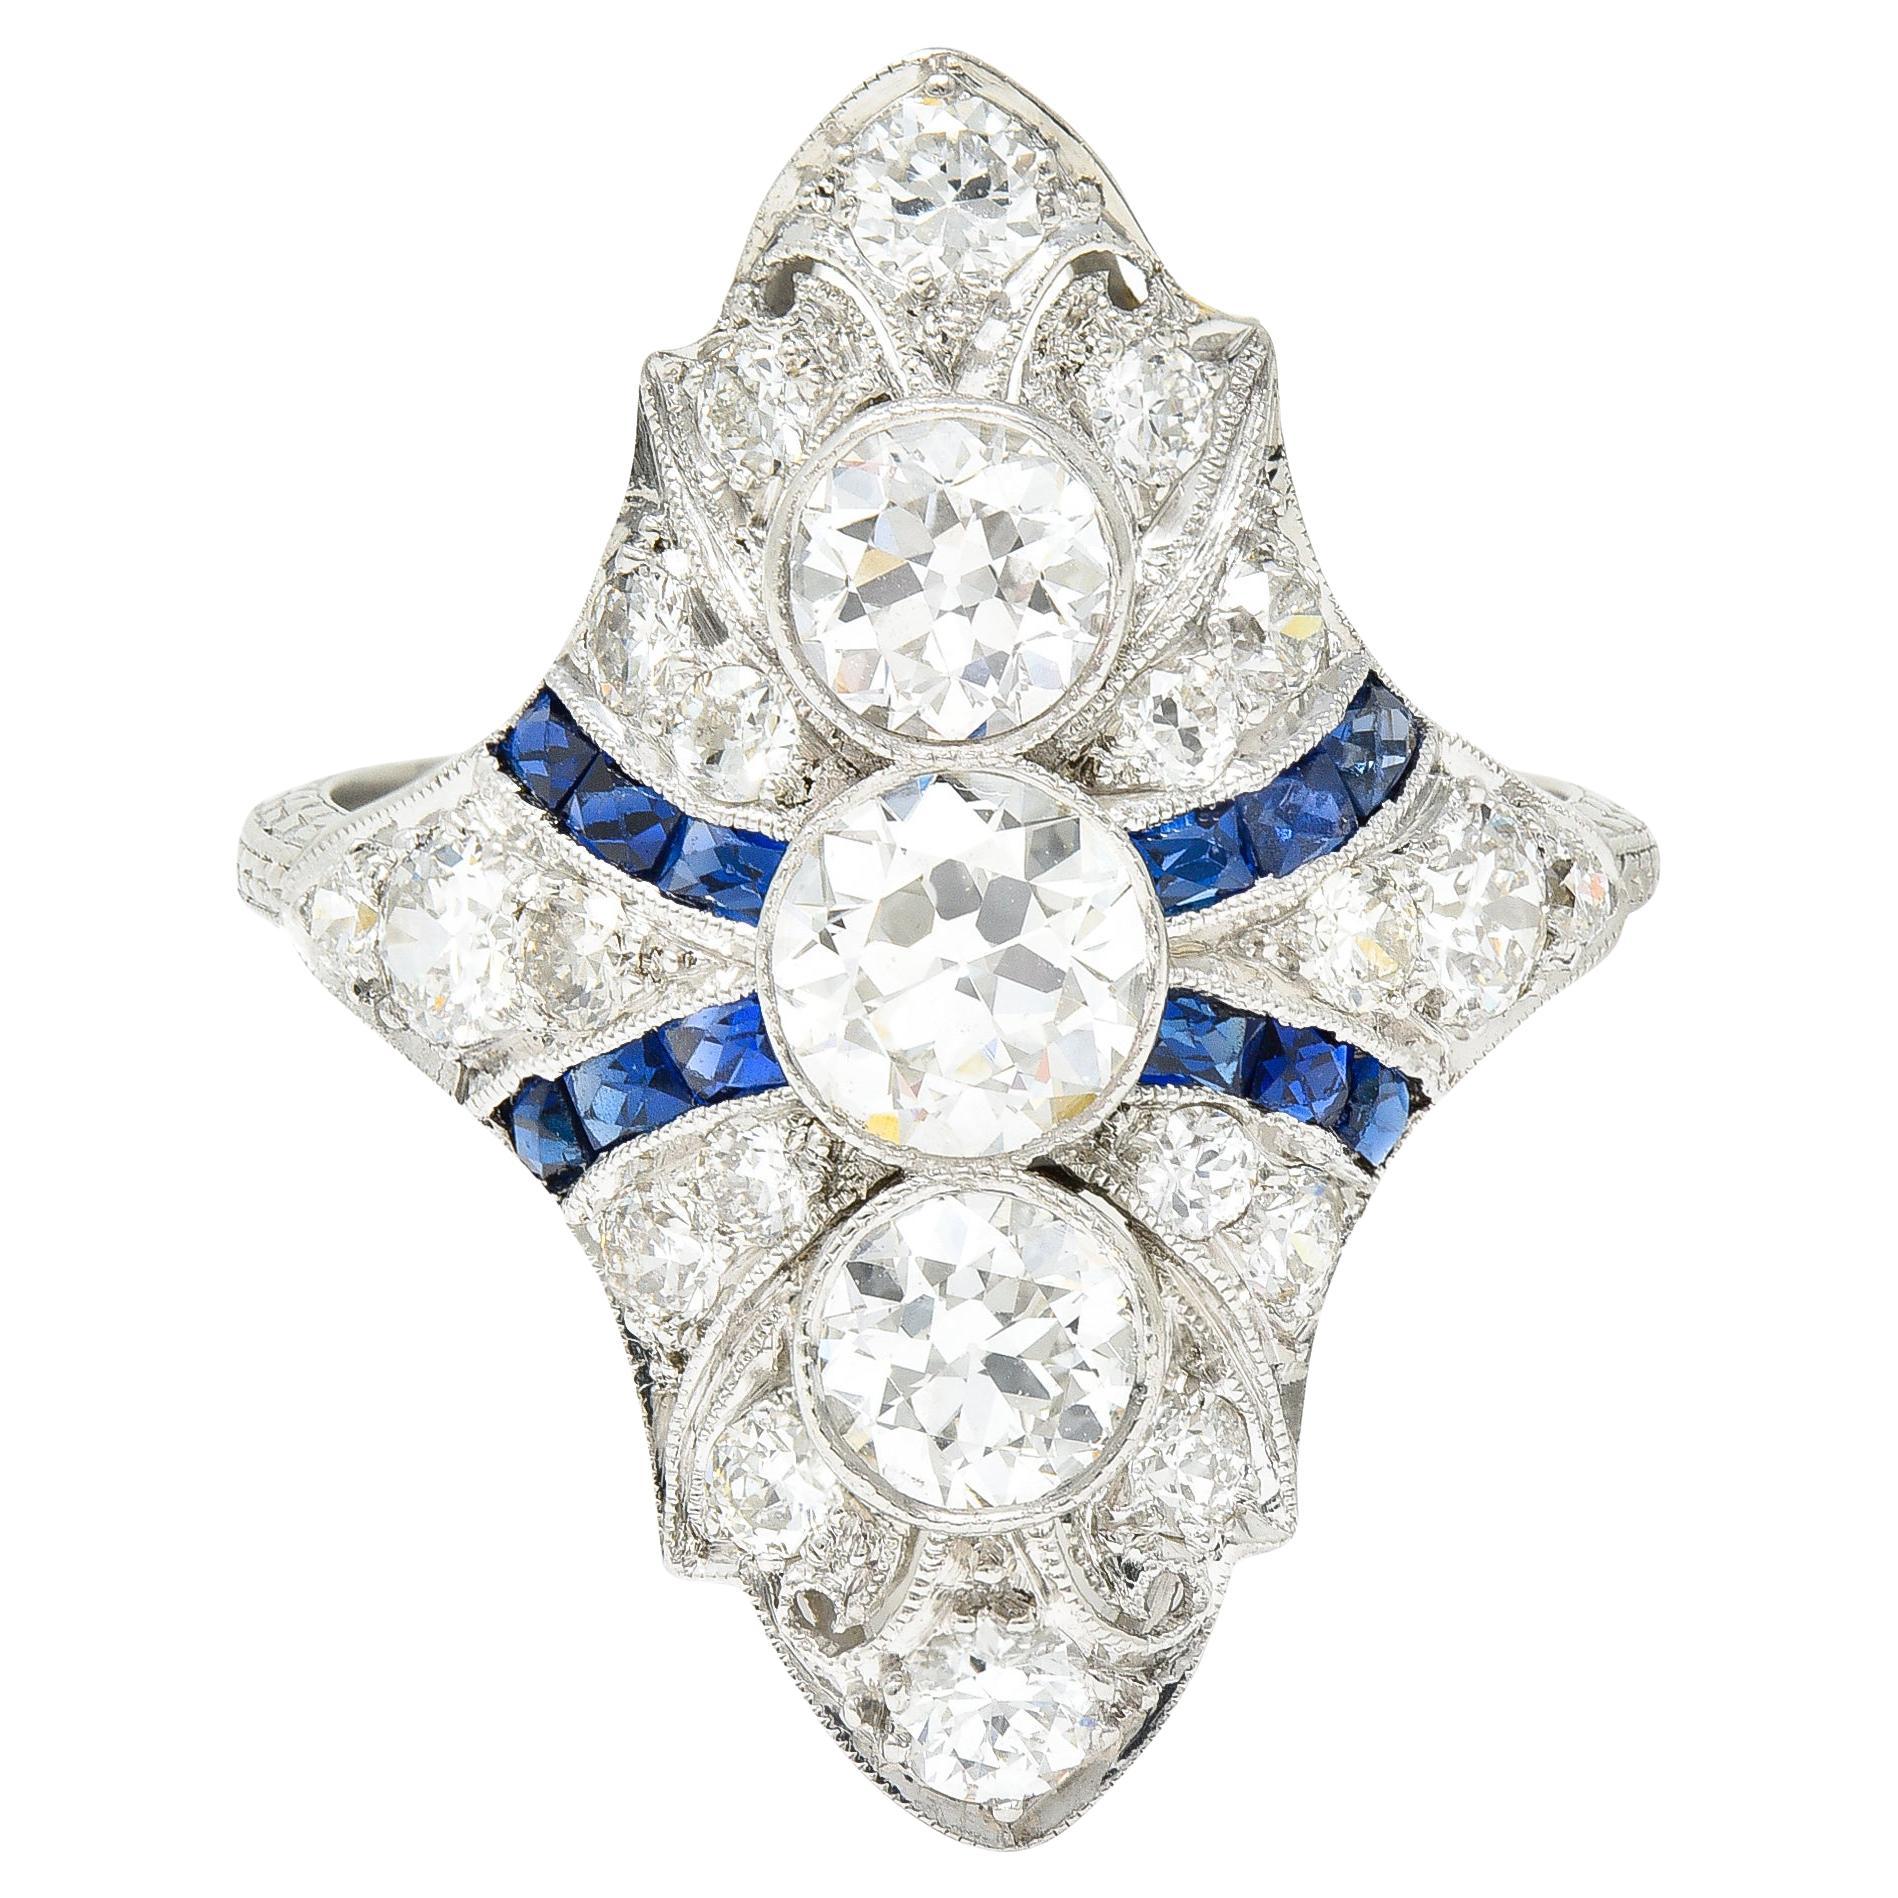 Art Deco 2.45 Carat Old European Cut Diamond French Cut Sapphire Platinum Ring